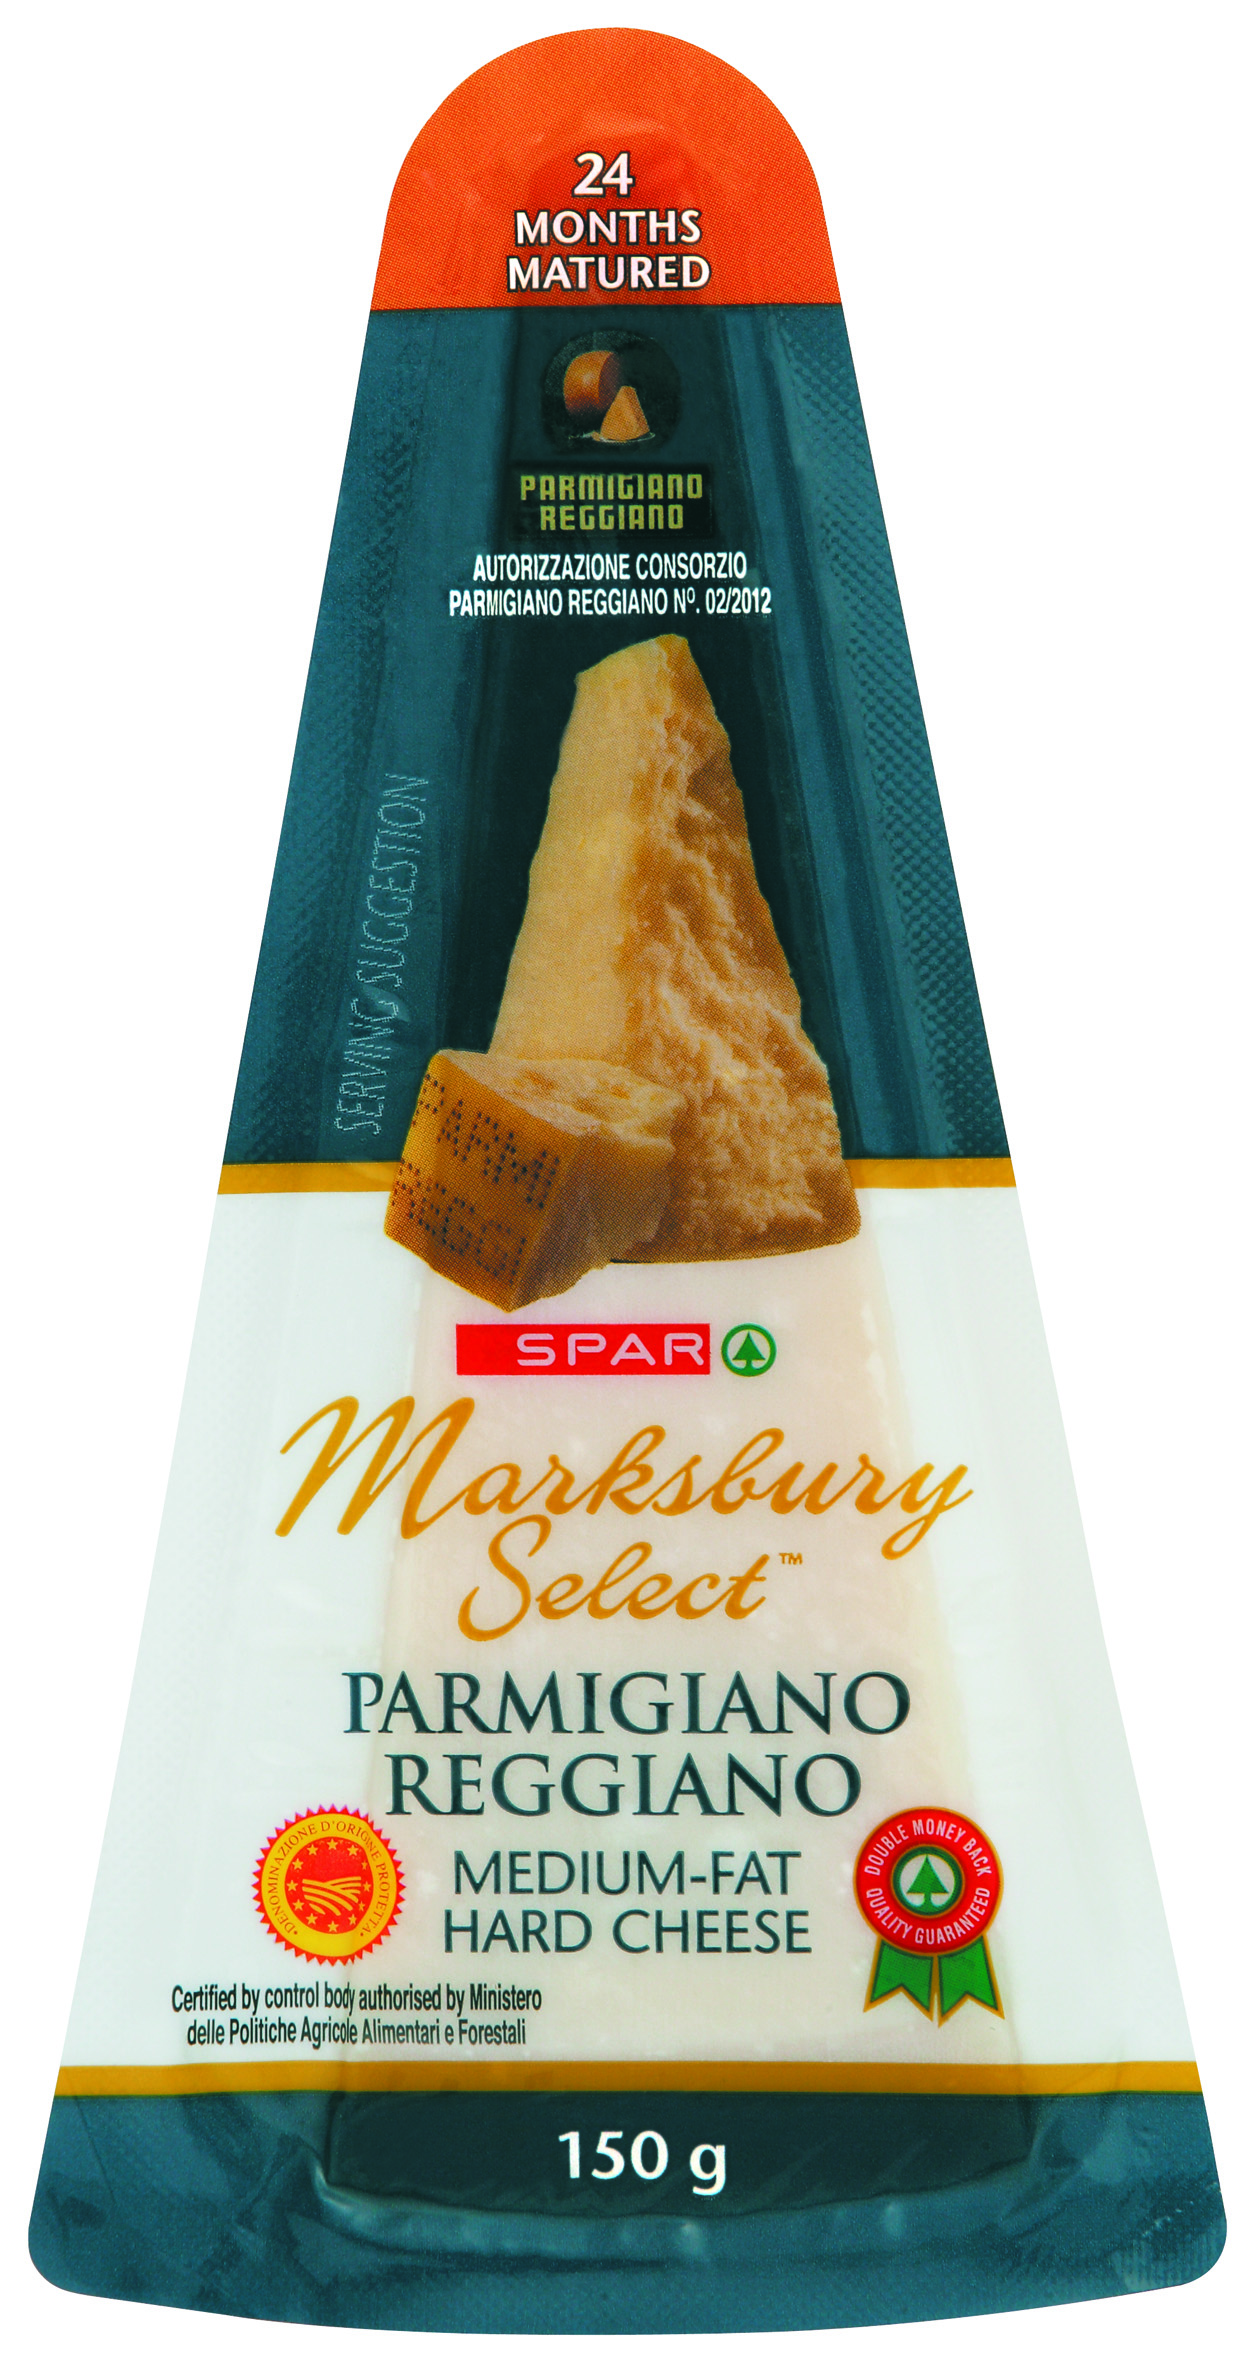 marksbury select parmigiano reggiano 24 months